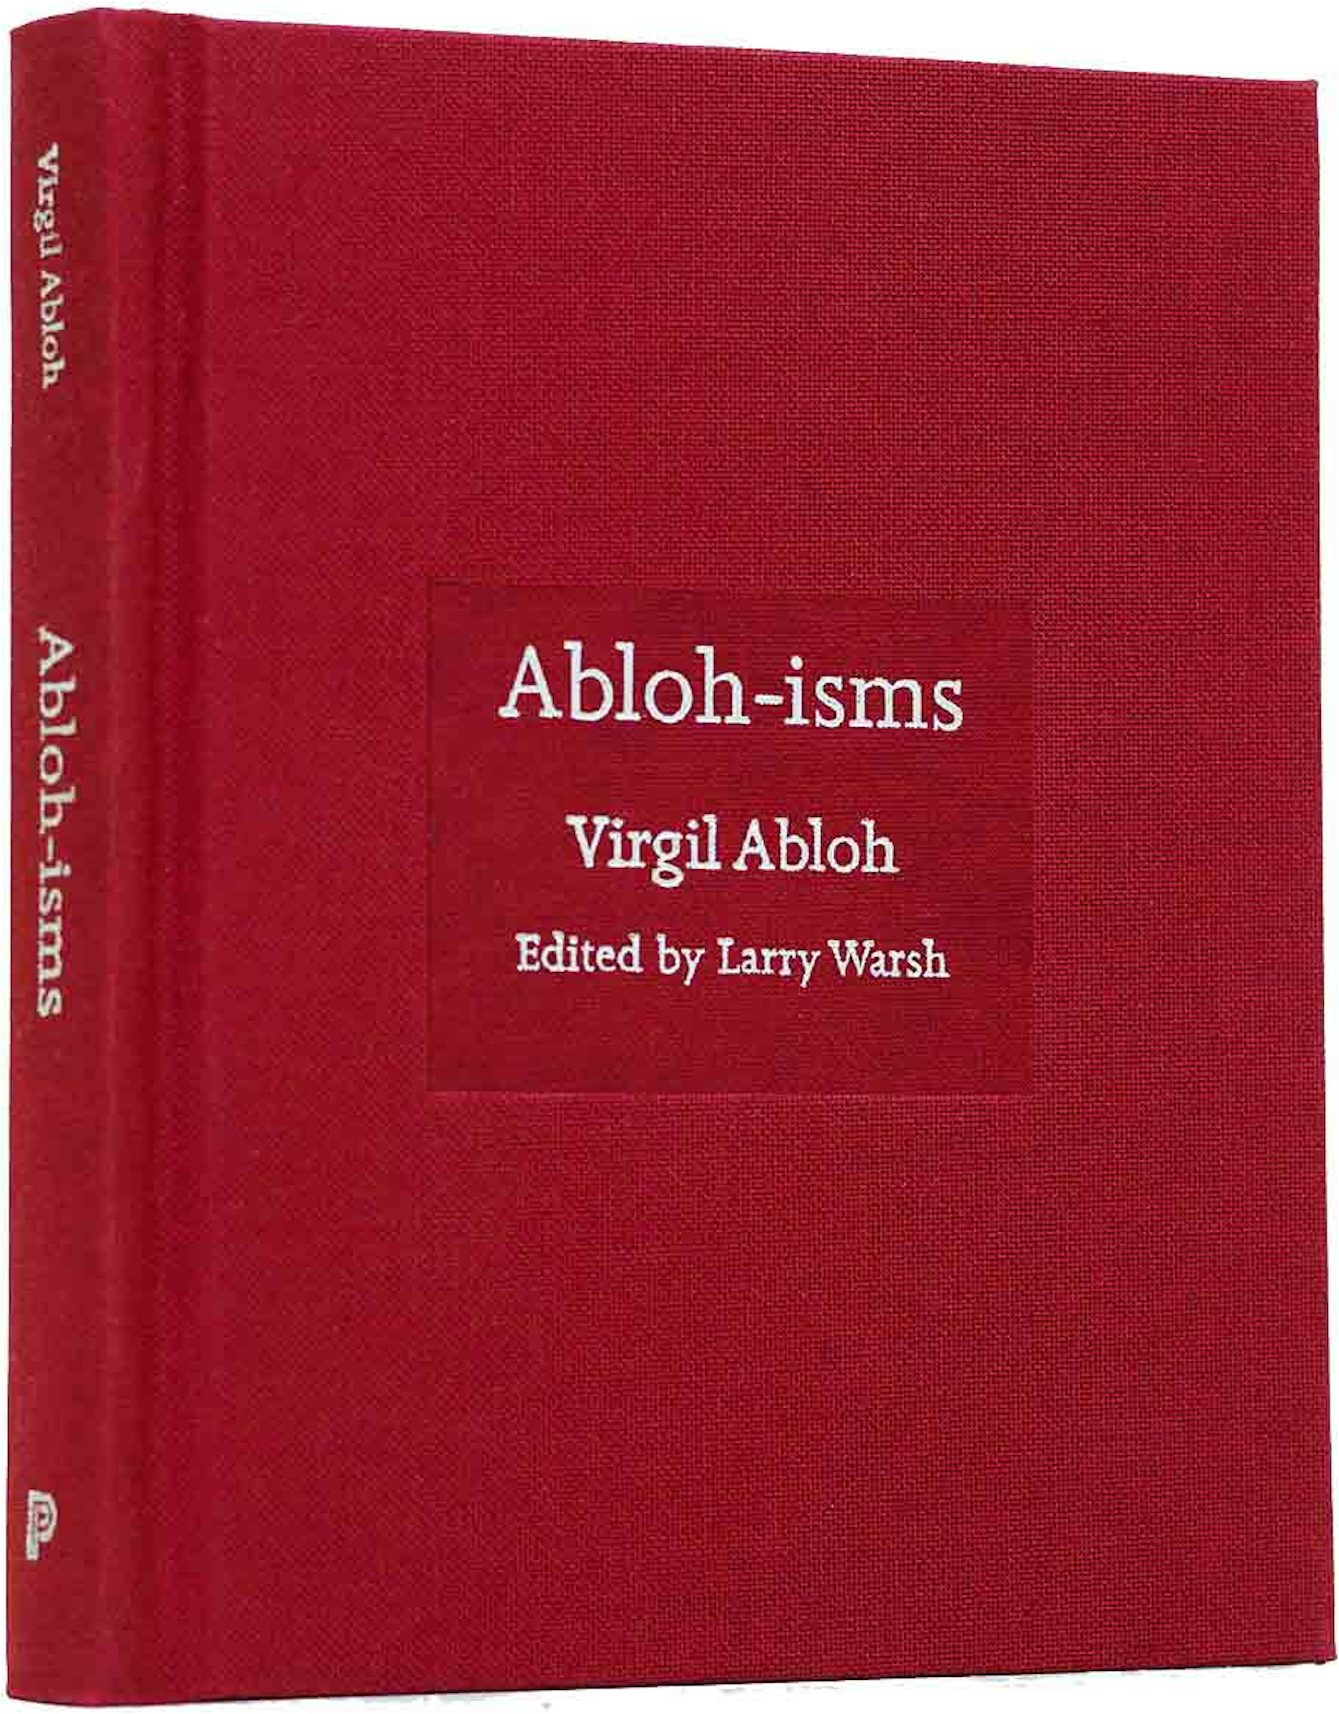 Virgil Abloh *SIGNED BY VIRGIL ABLOH* 1st ed. “Figures Of Speech” Book